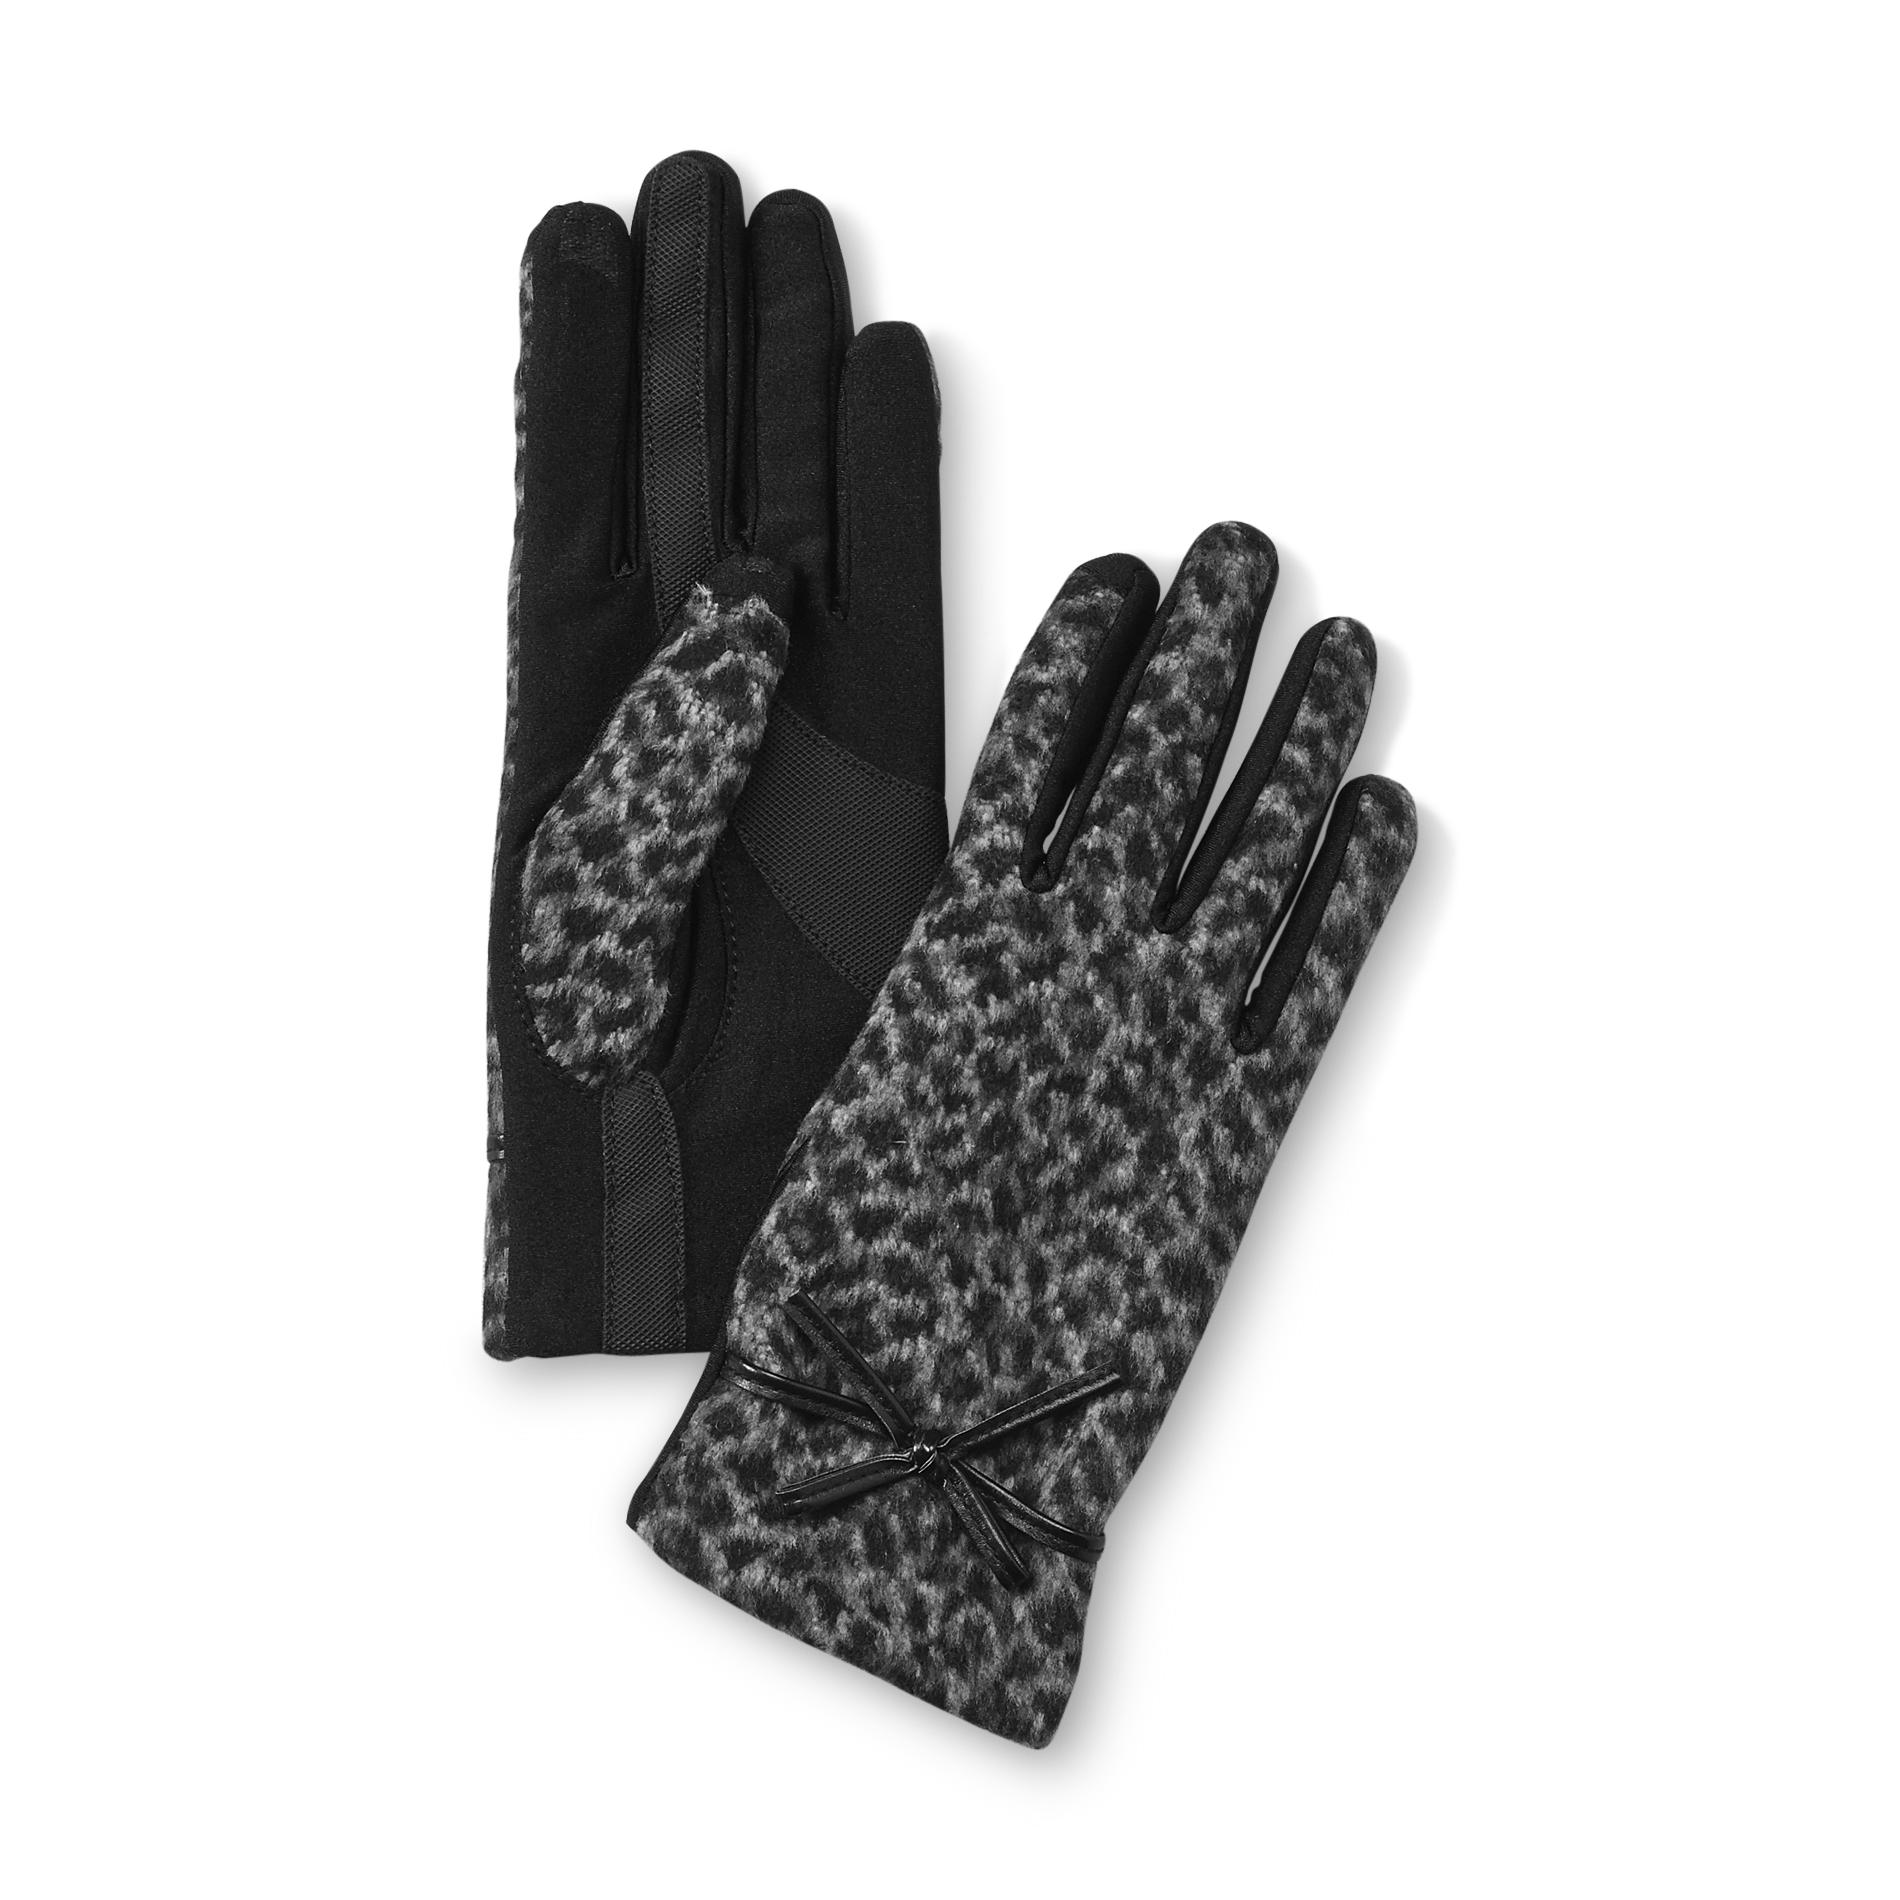 Isotoner Women's SmarTouch Gloves - Leopard Print